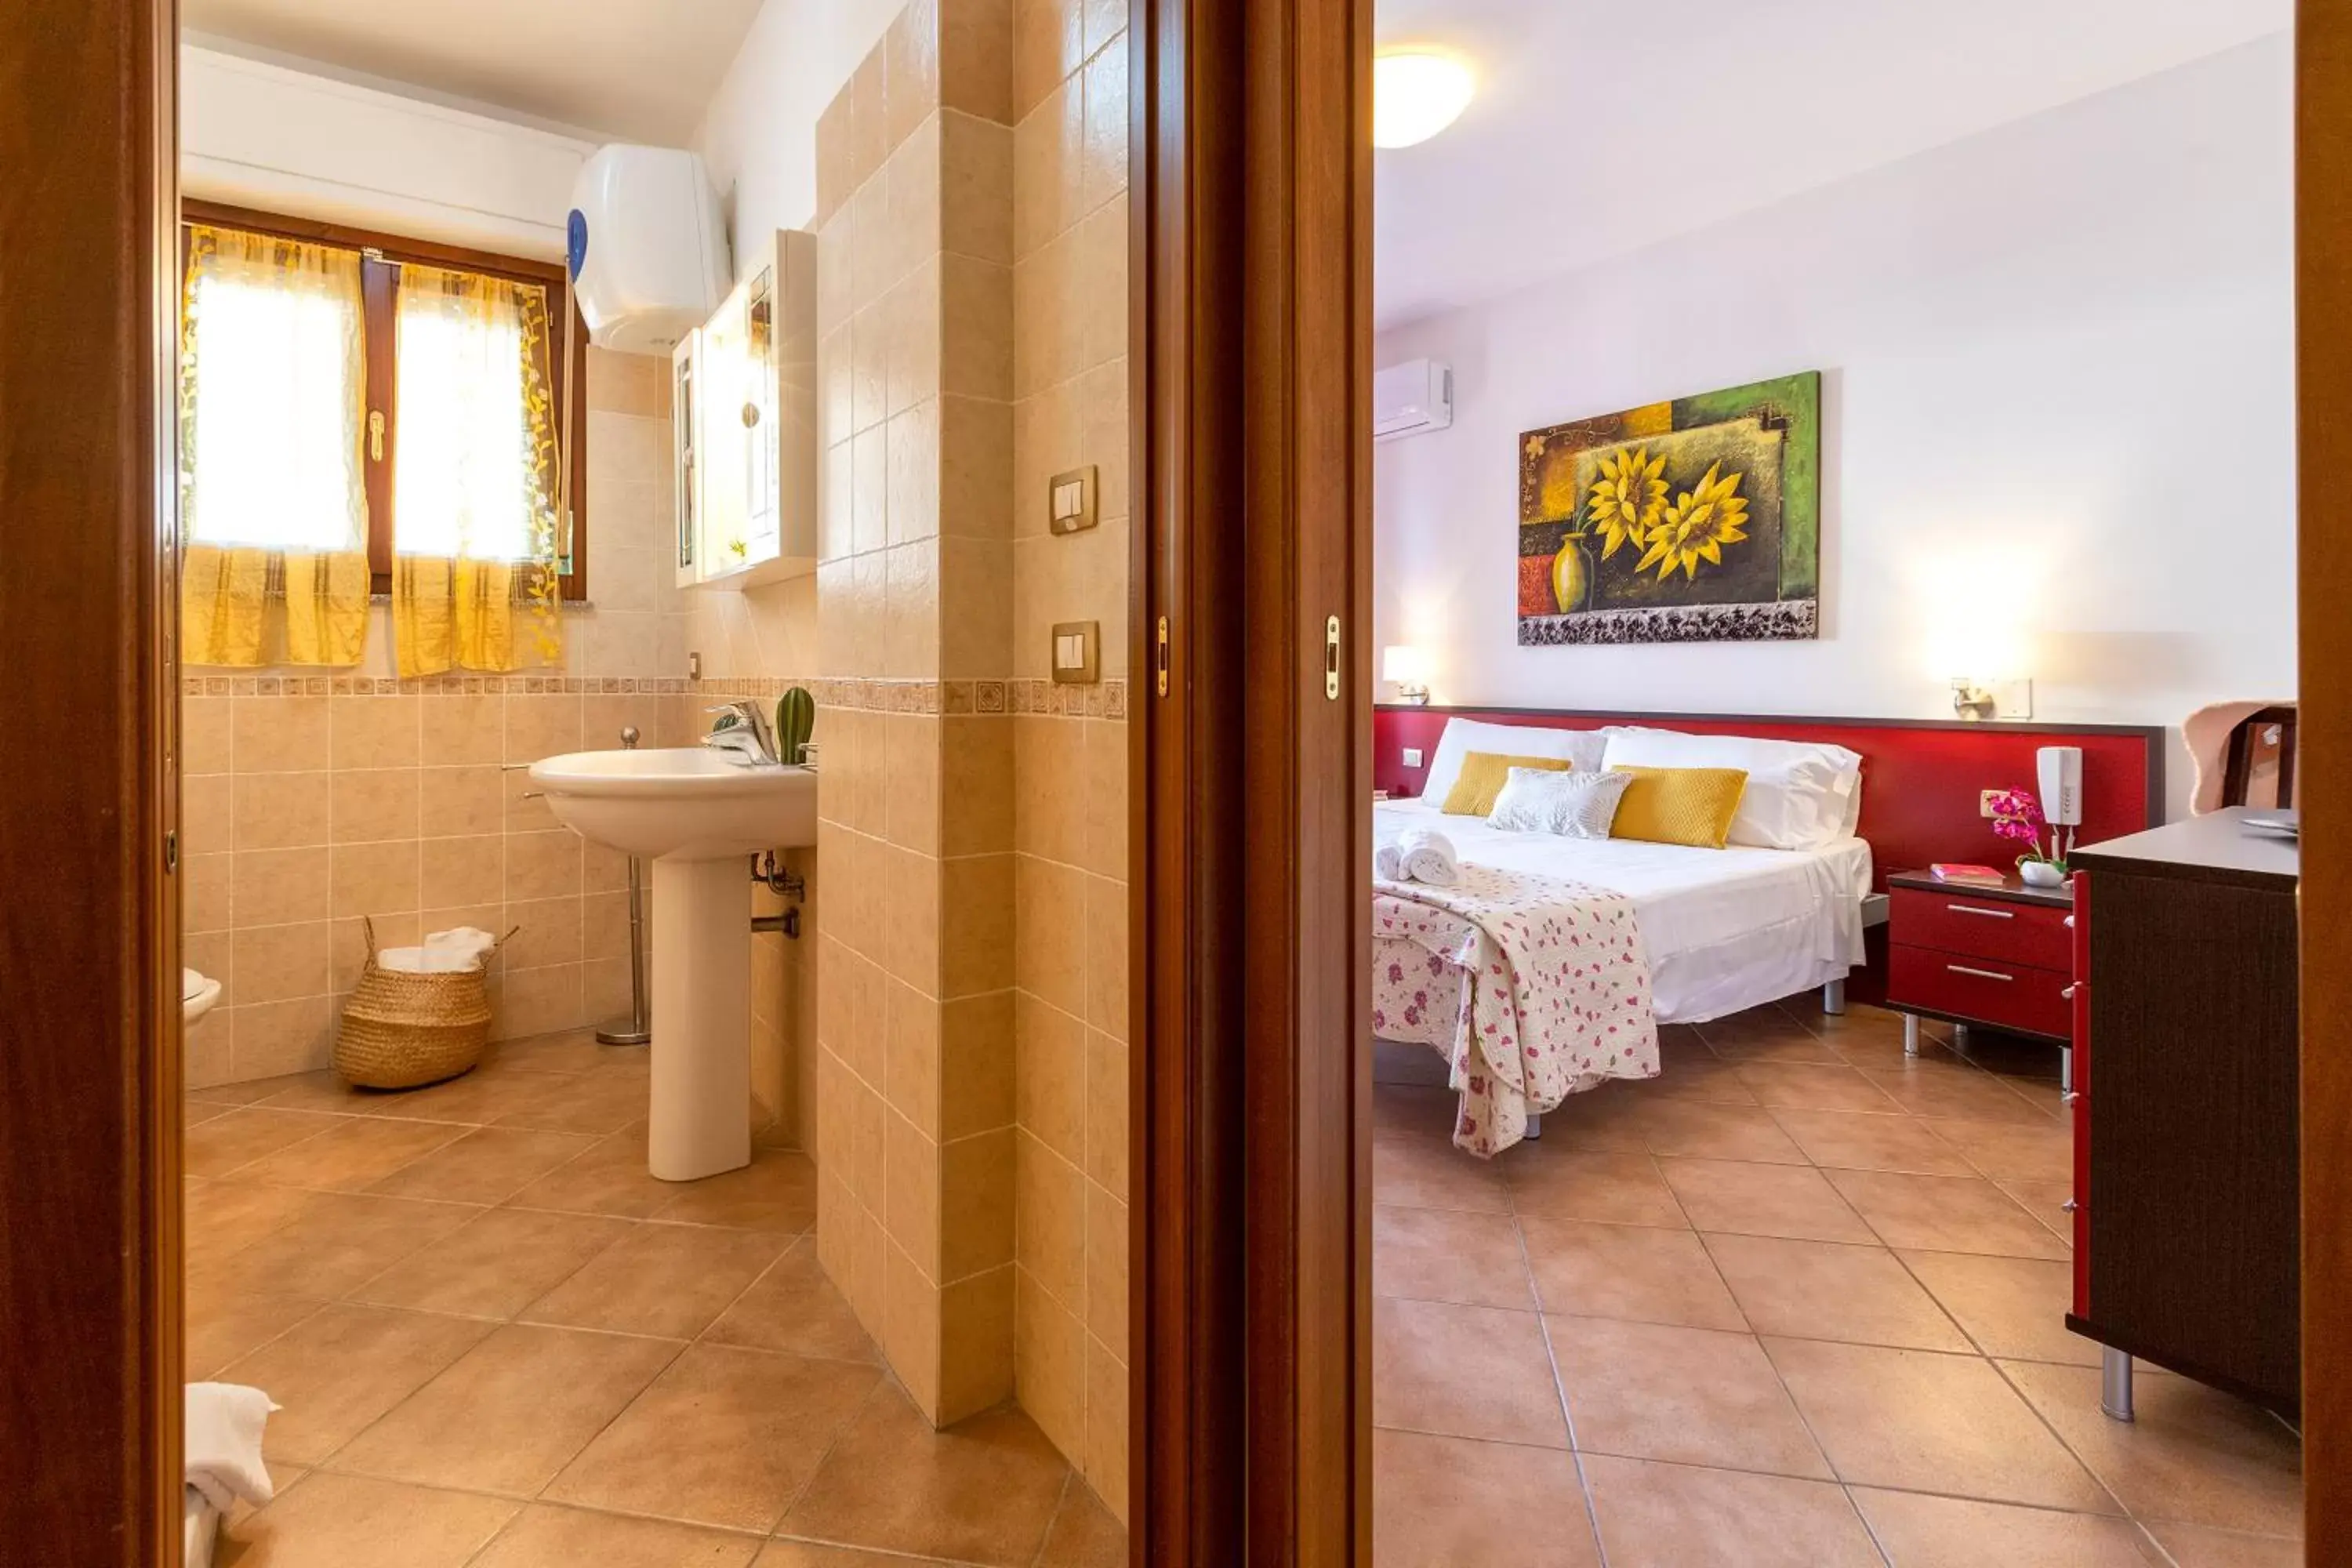 Photo of the whole room, Bathroom in KaRol Casa Vacanze